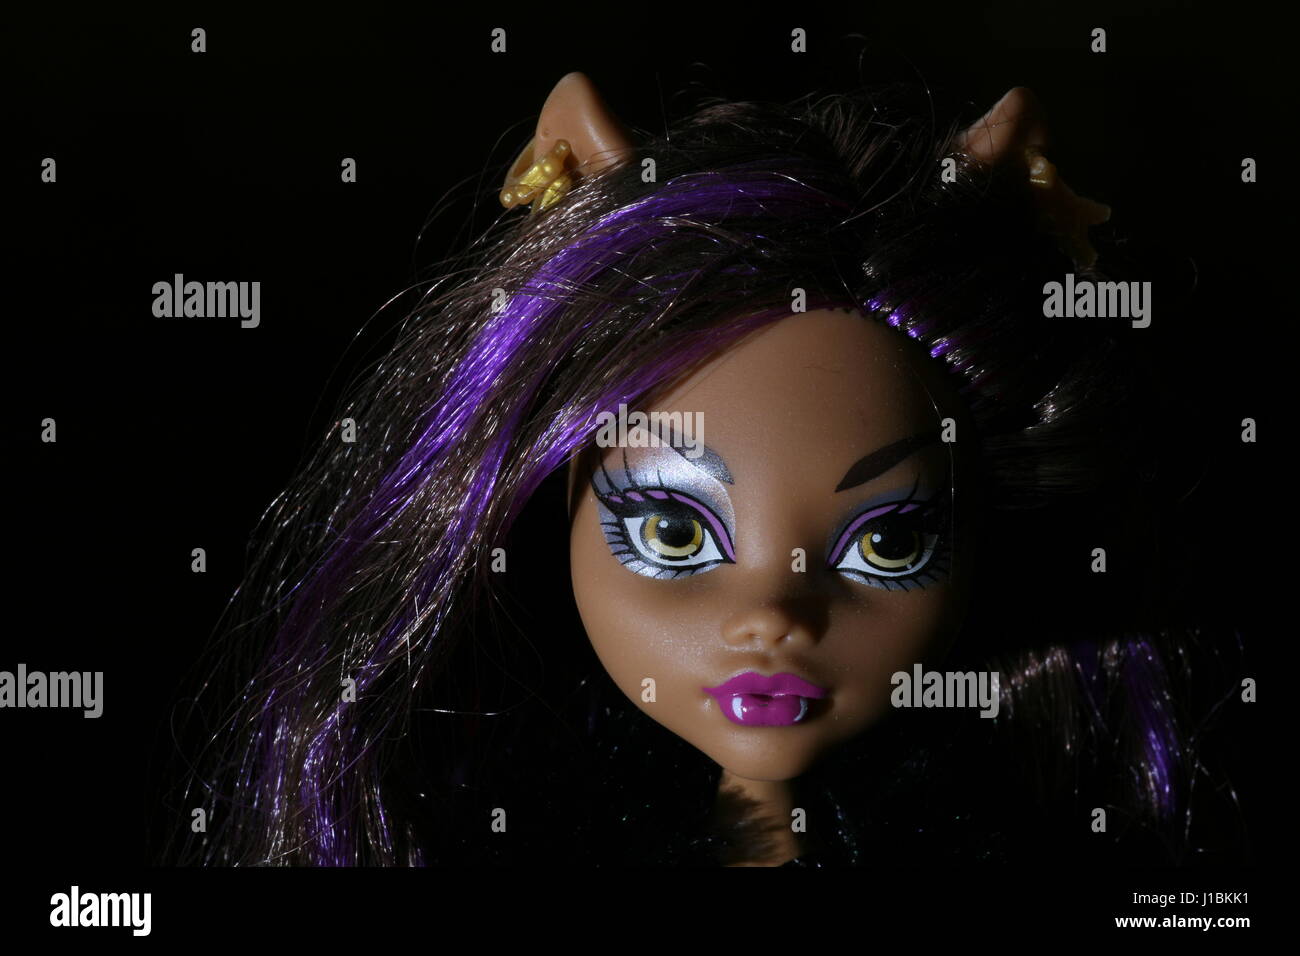 Monster High Puppe Stockfoto